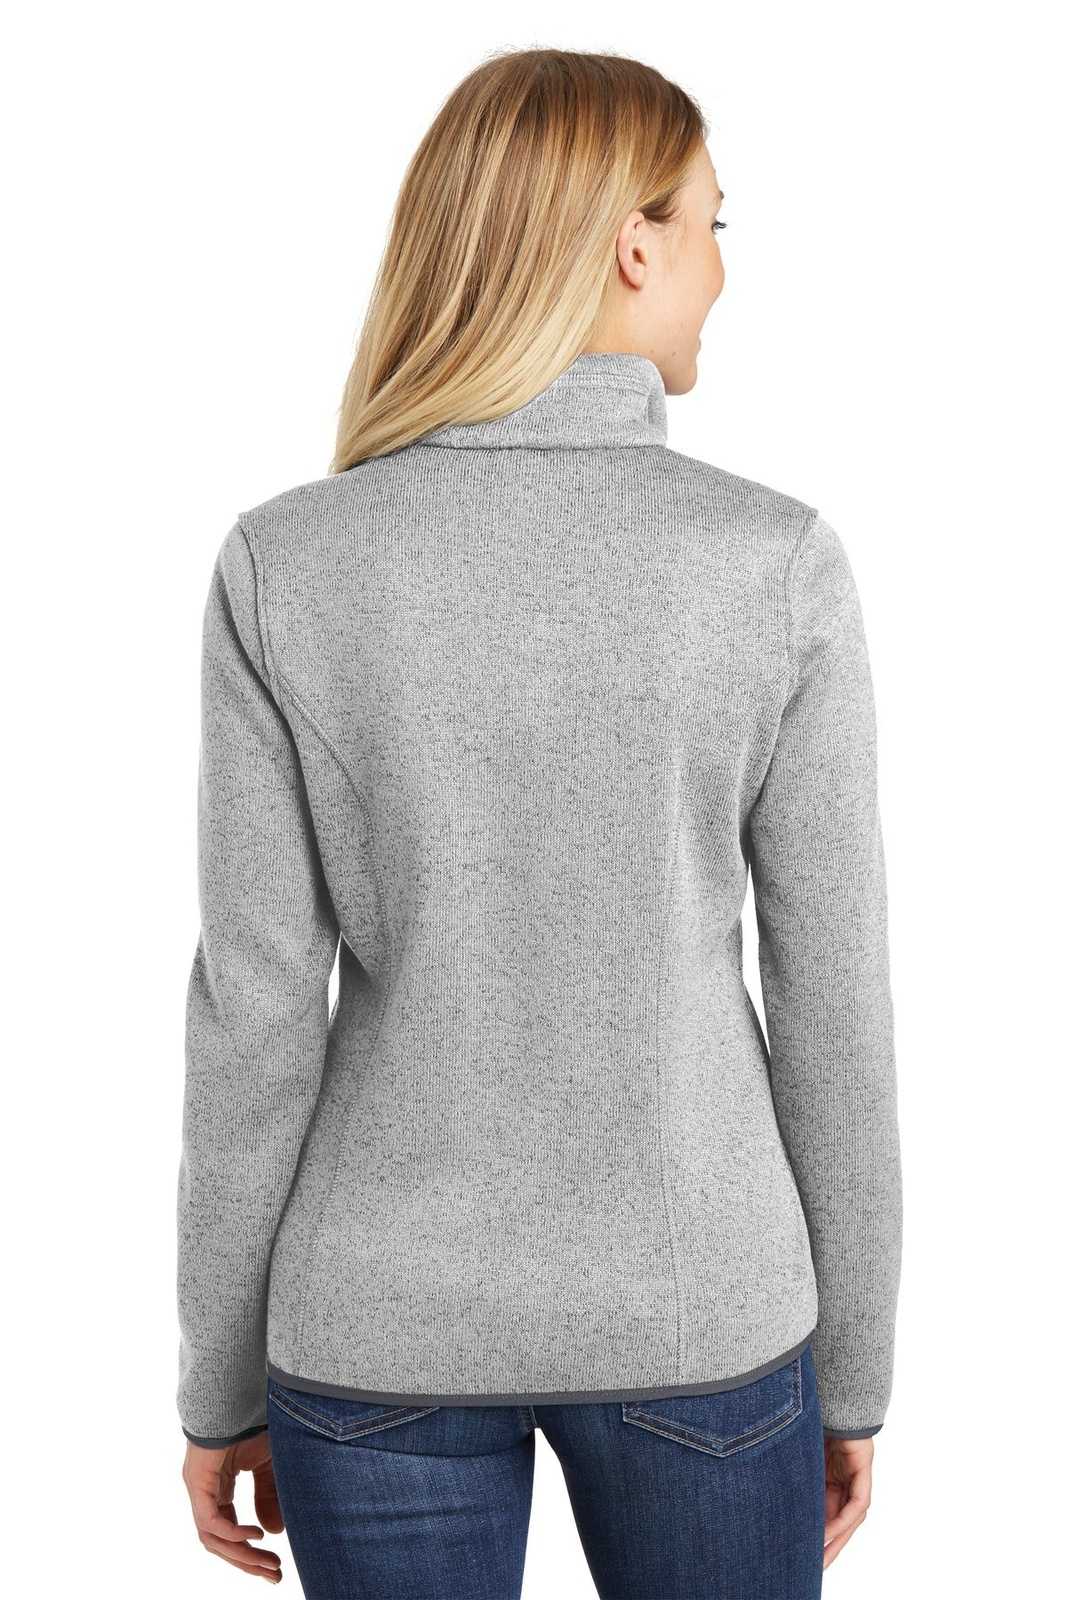 Port Authority L232 Ladies Sweater Fleece Jacket - Gray Heather - HIT a Double - 1